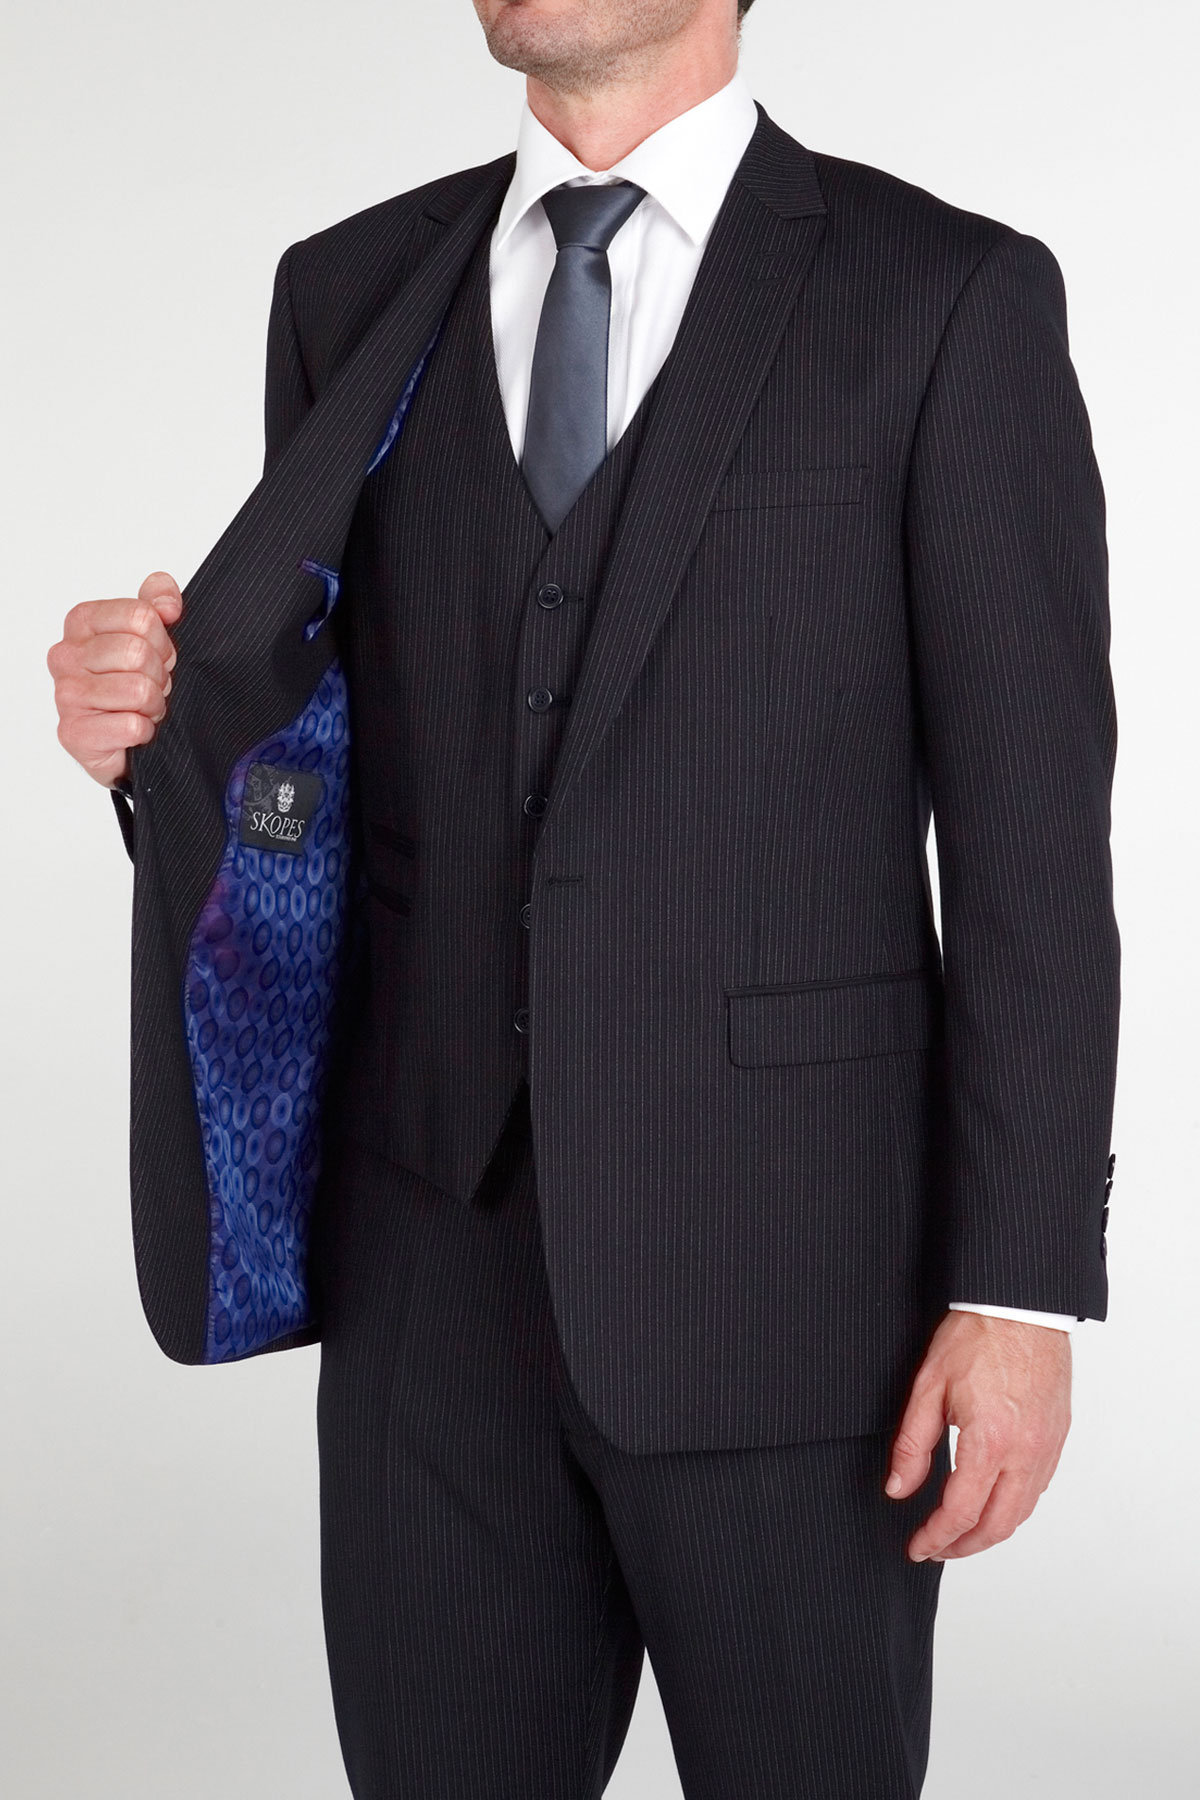 http://www.suitsmen.co.uk/suit-images/full-size/doyle-tailored-suit-jacket-1.jpg